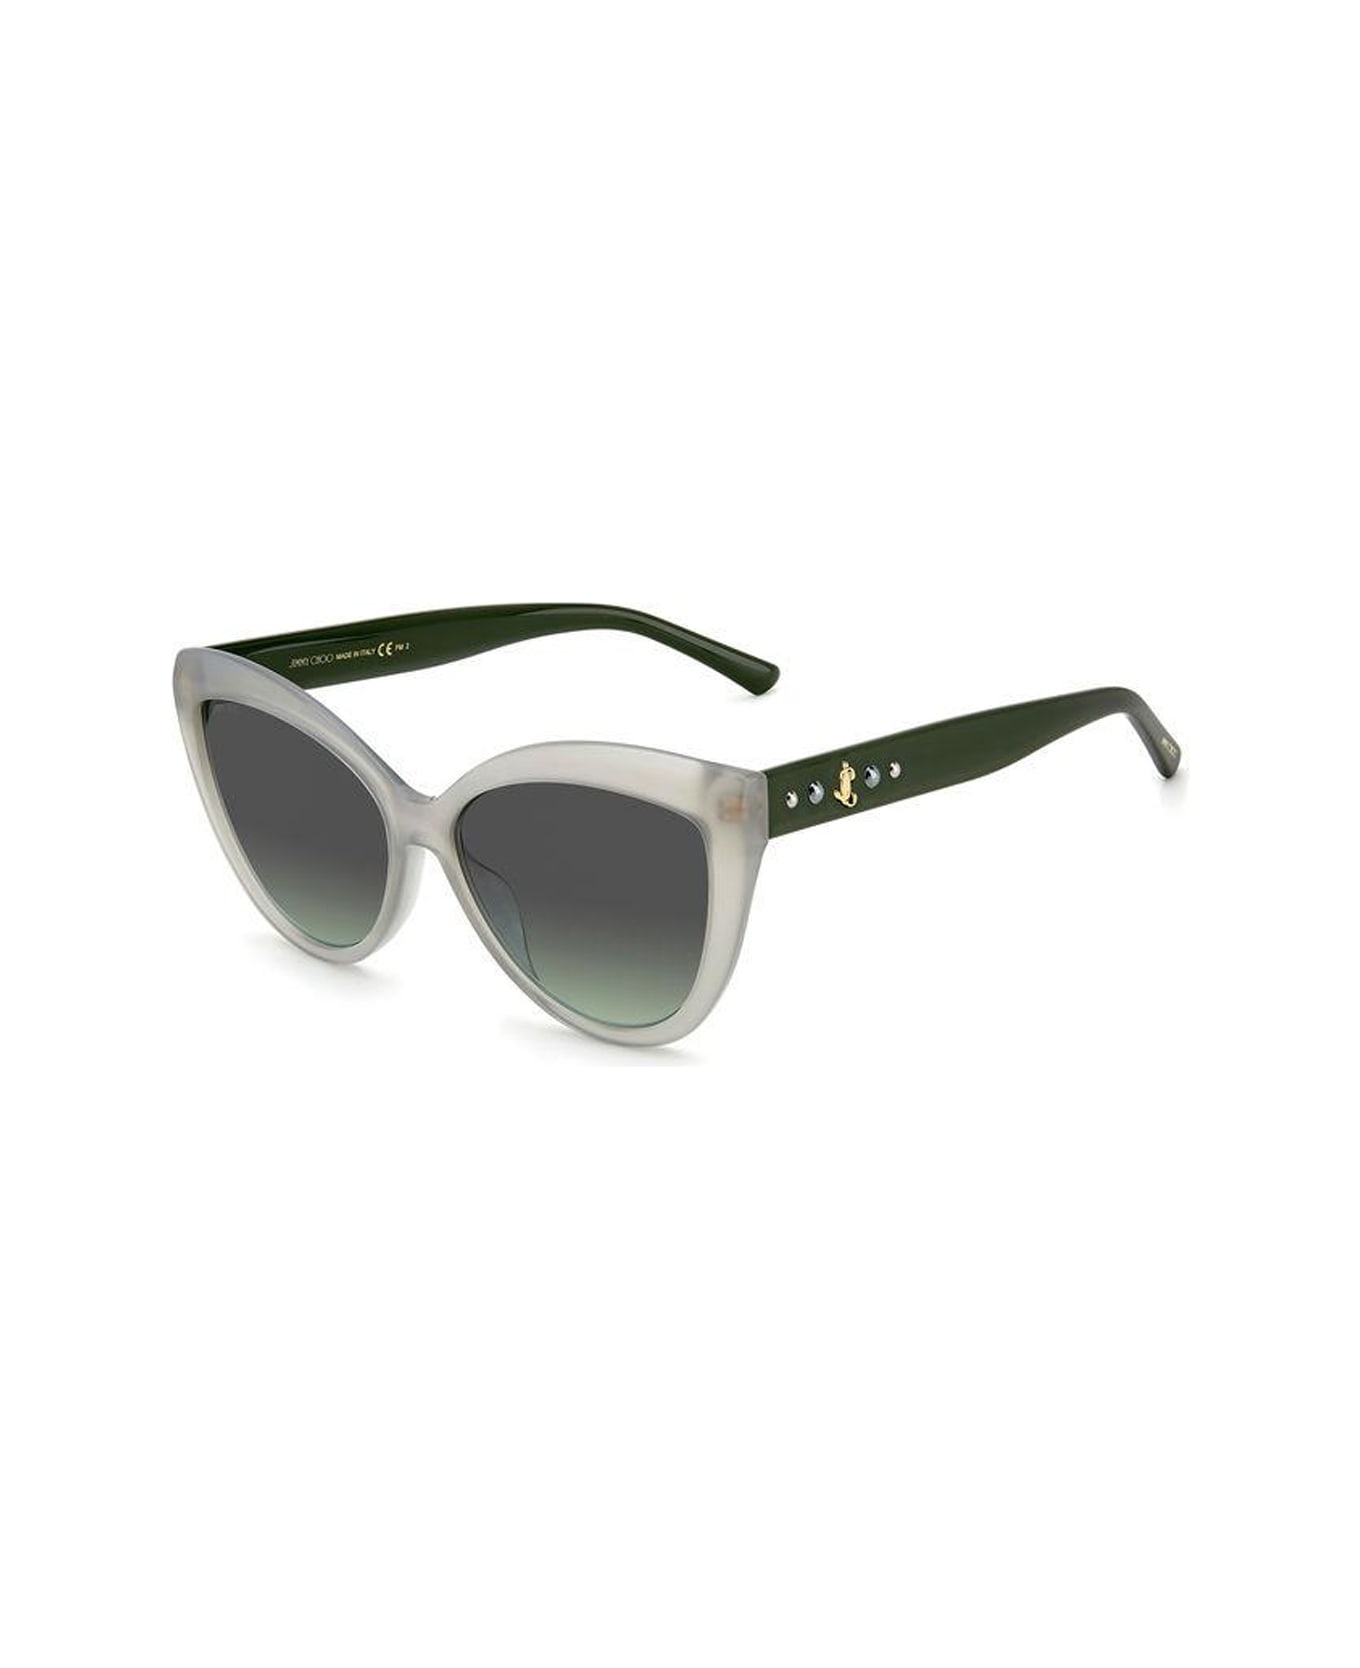 Jimmy Choo Eyewear Sinnie/g/s Sunglasses - Verde